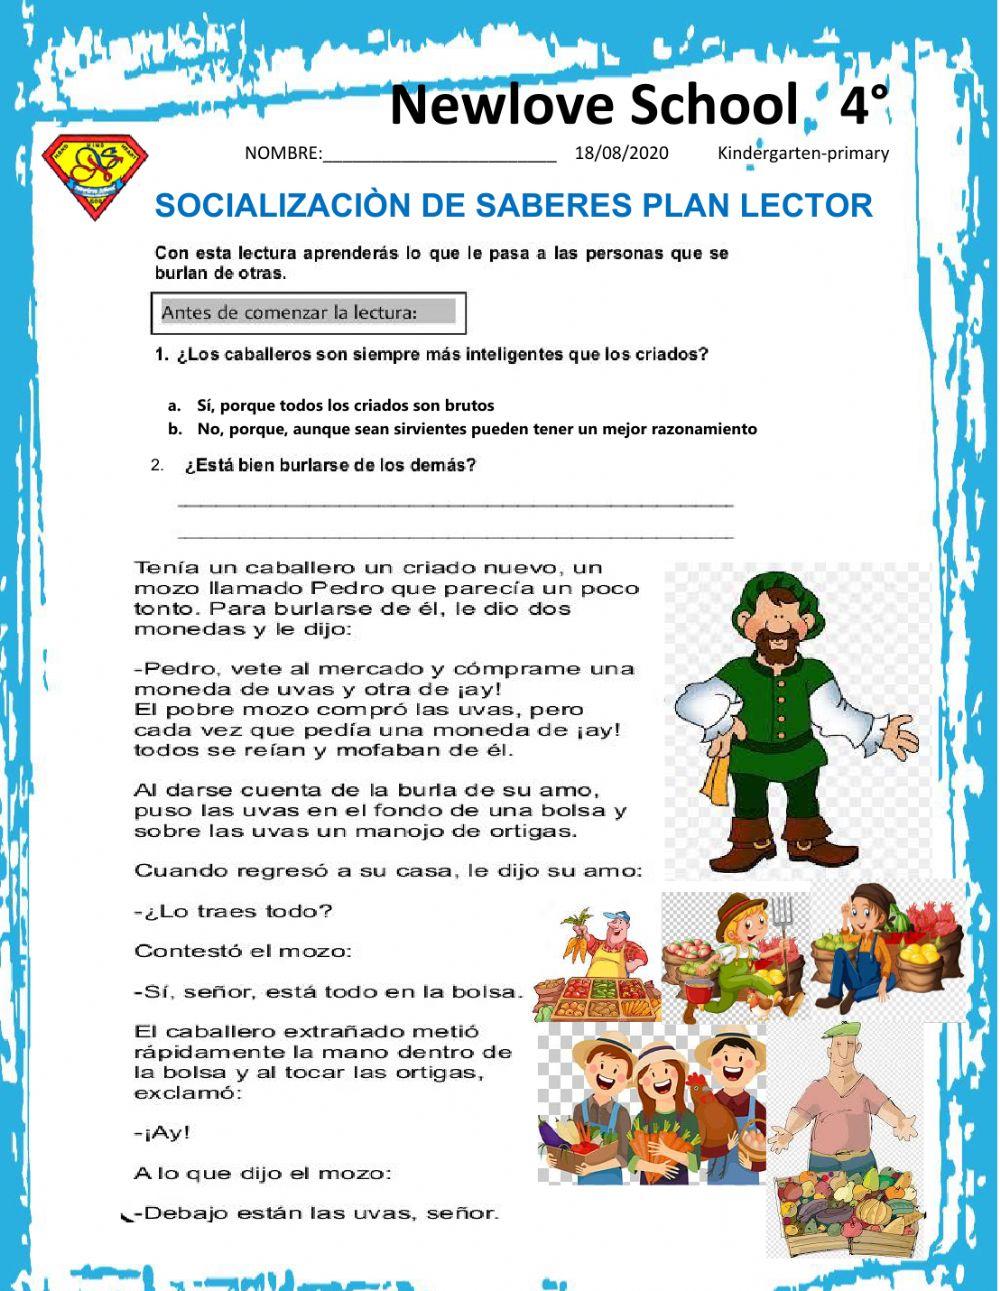 SOCIALIZACION DE SABERES DE PLAN LECTOR 4º